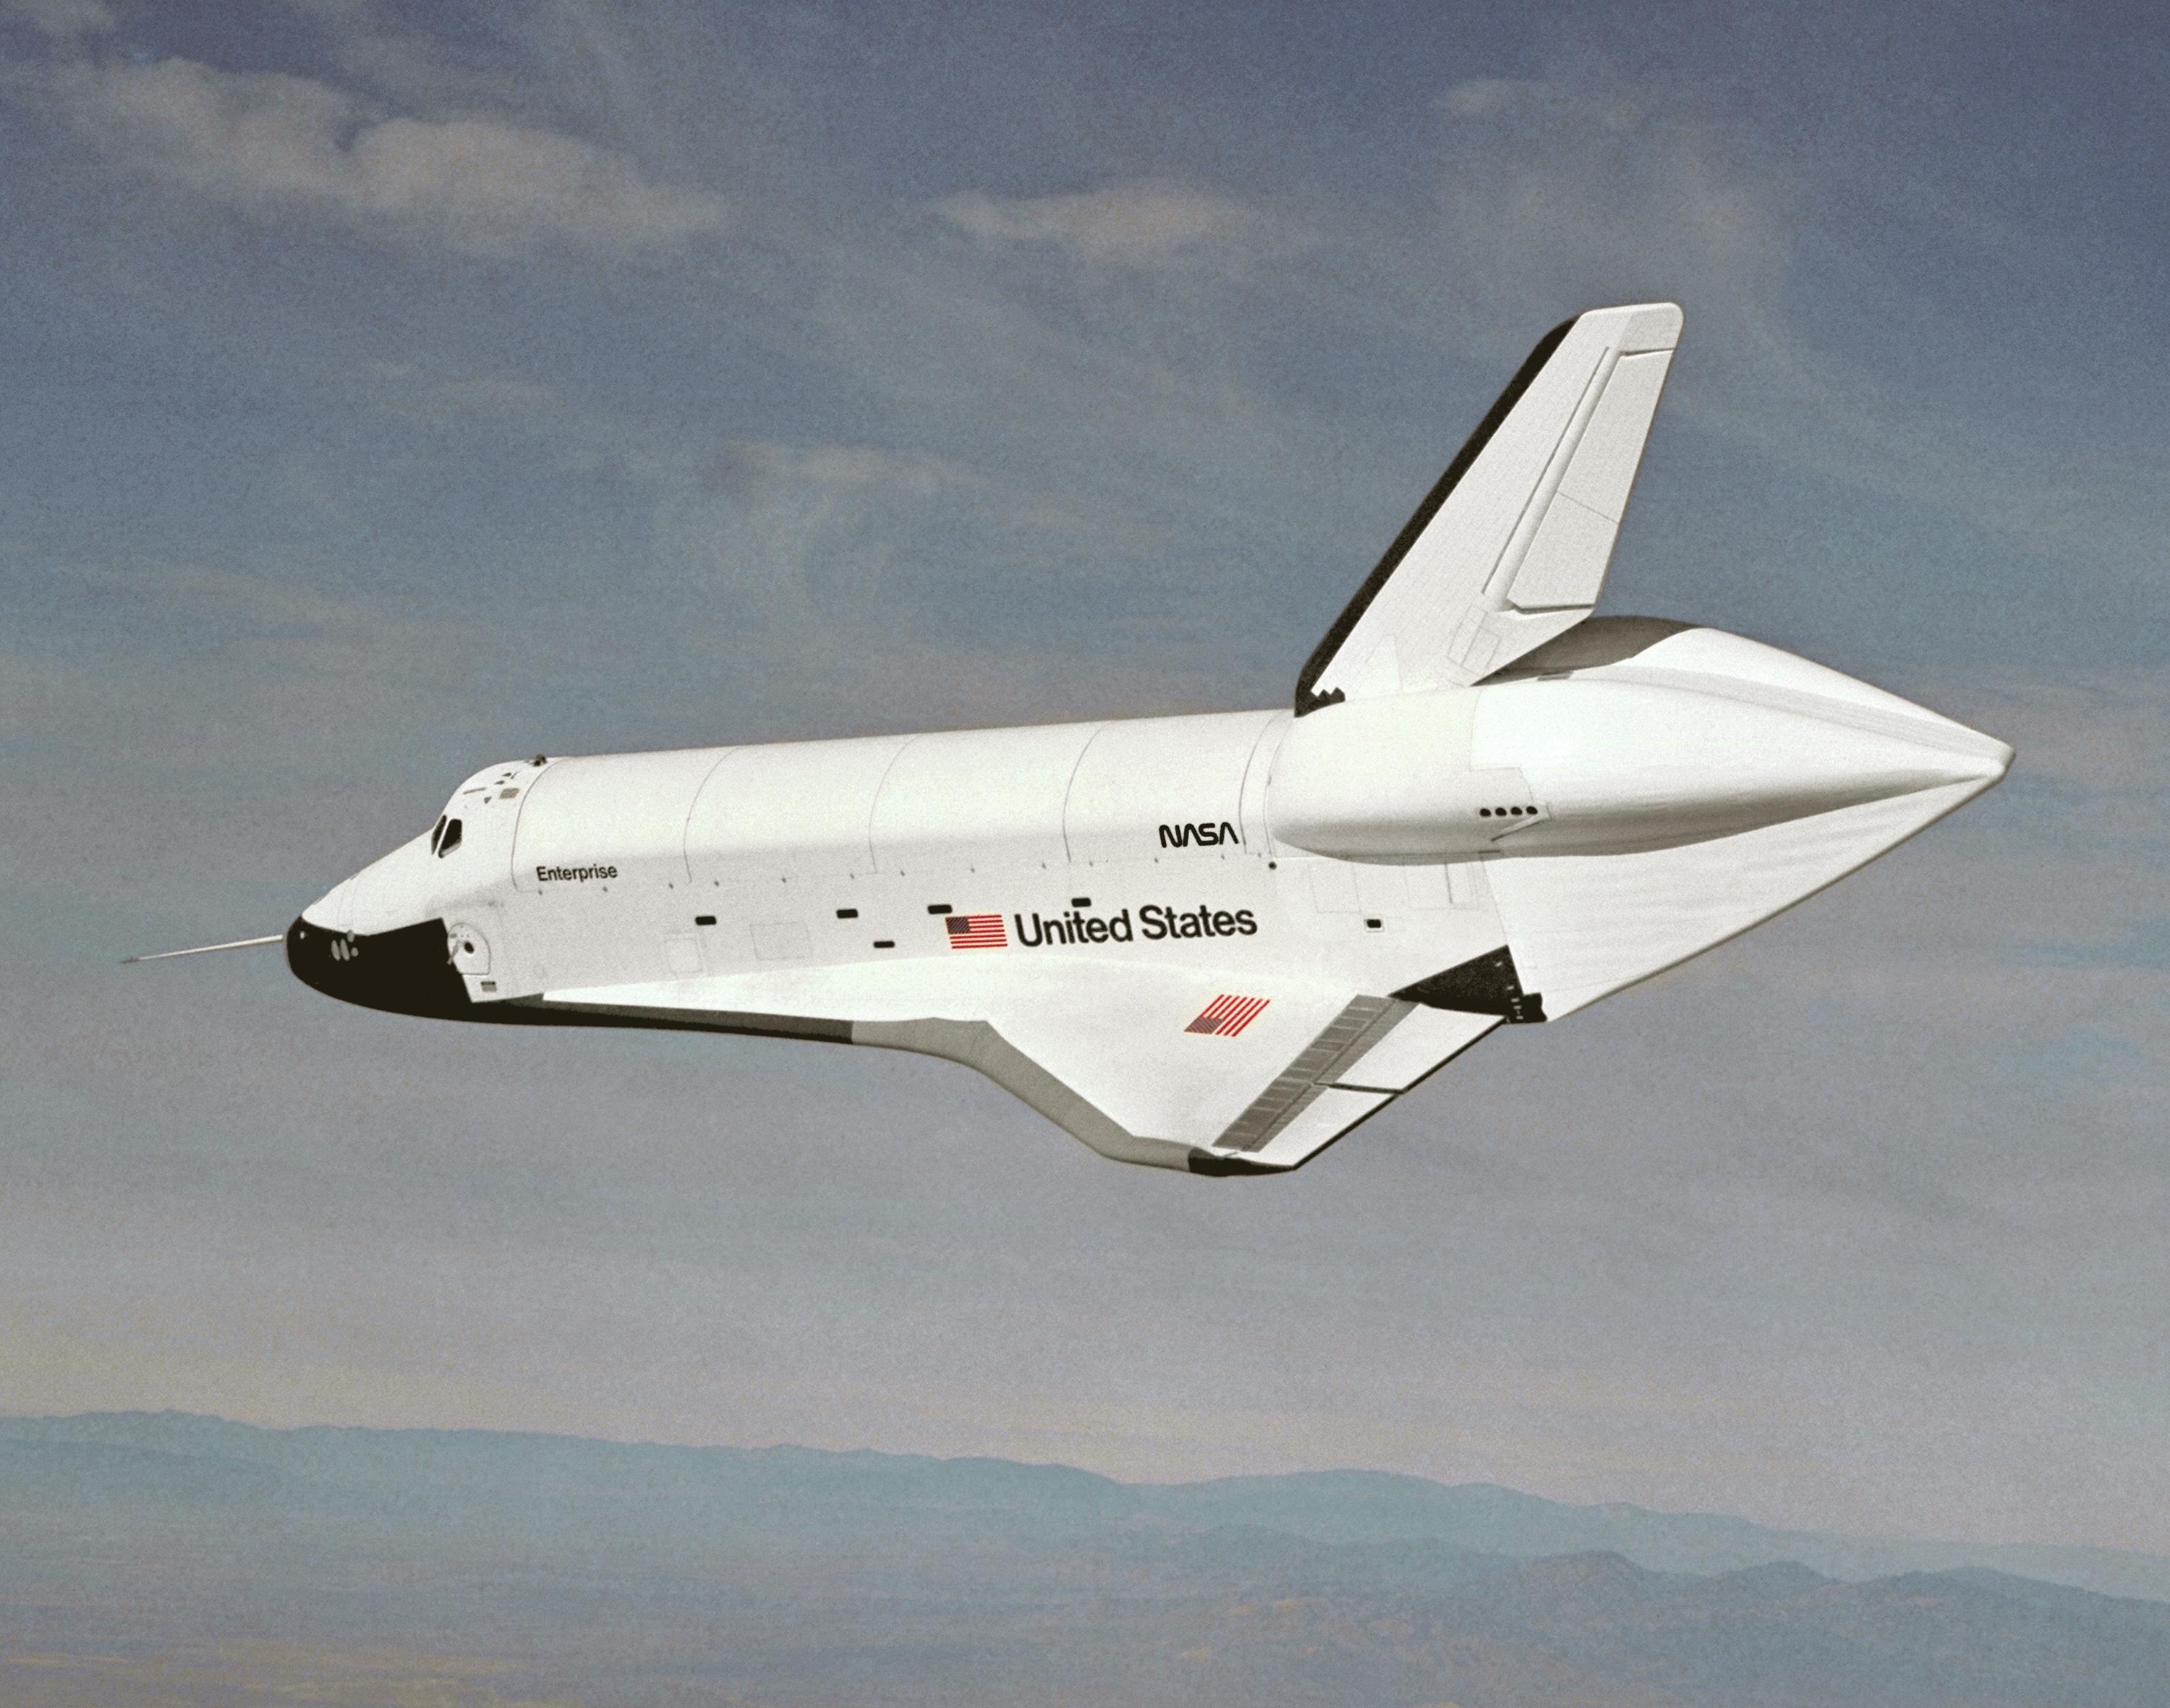 Space Shuttle Orbiiter Enterprise during a glide test. (NASA)